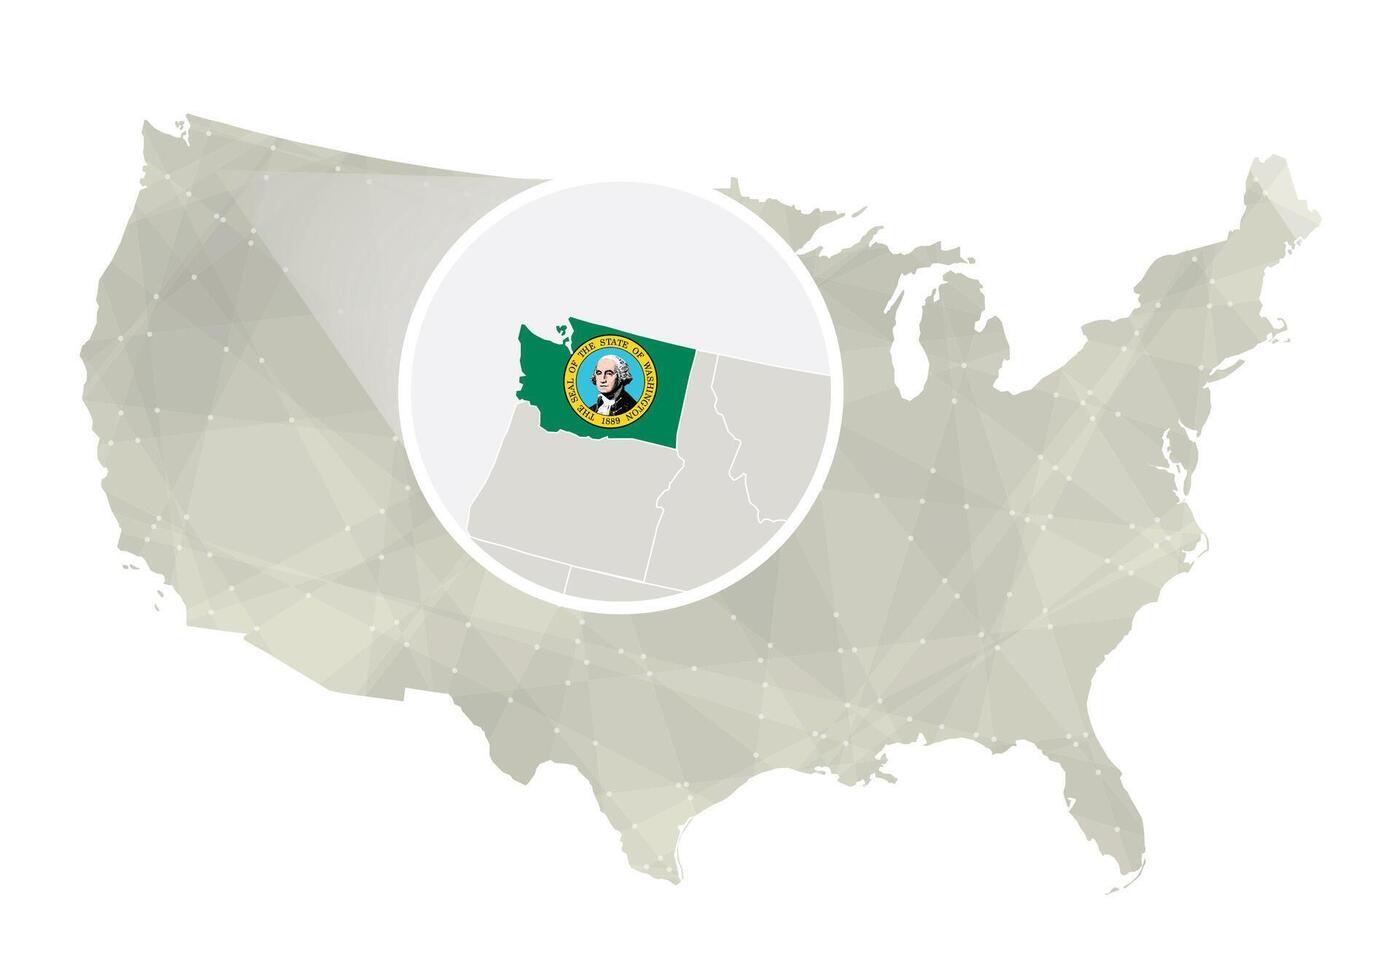 poligonal abstrato EUA mapa com ampliado Washington estado. vetor